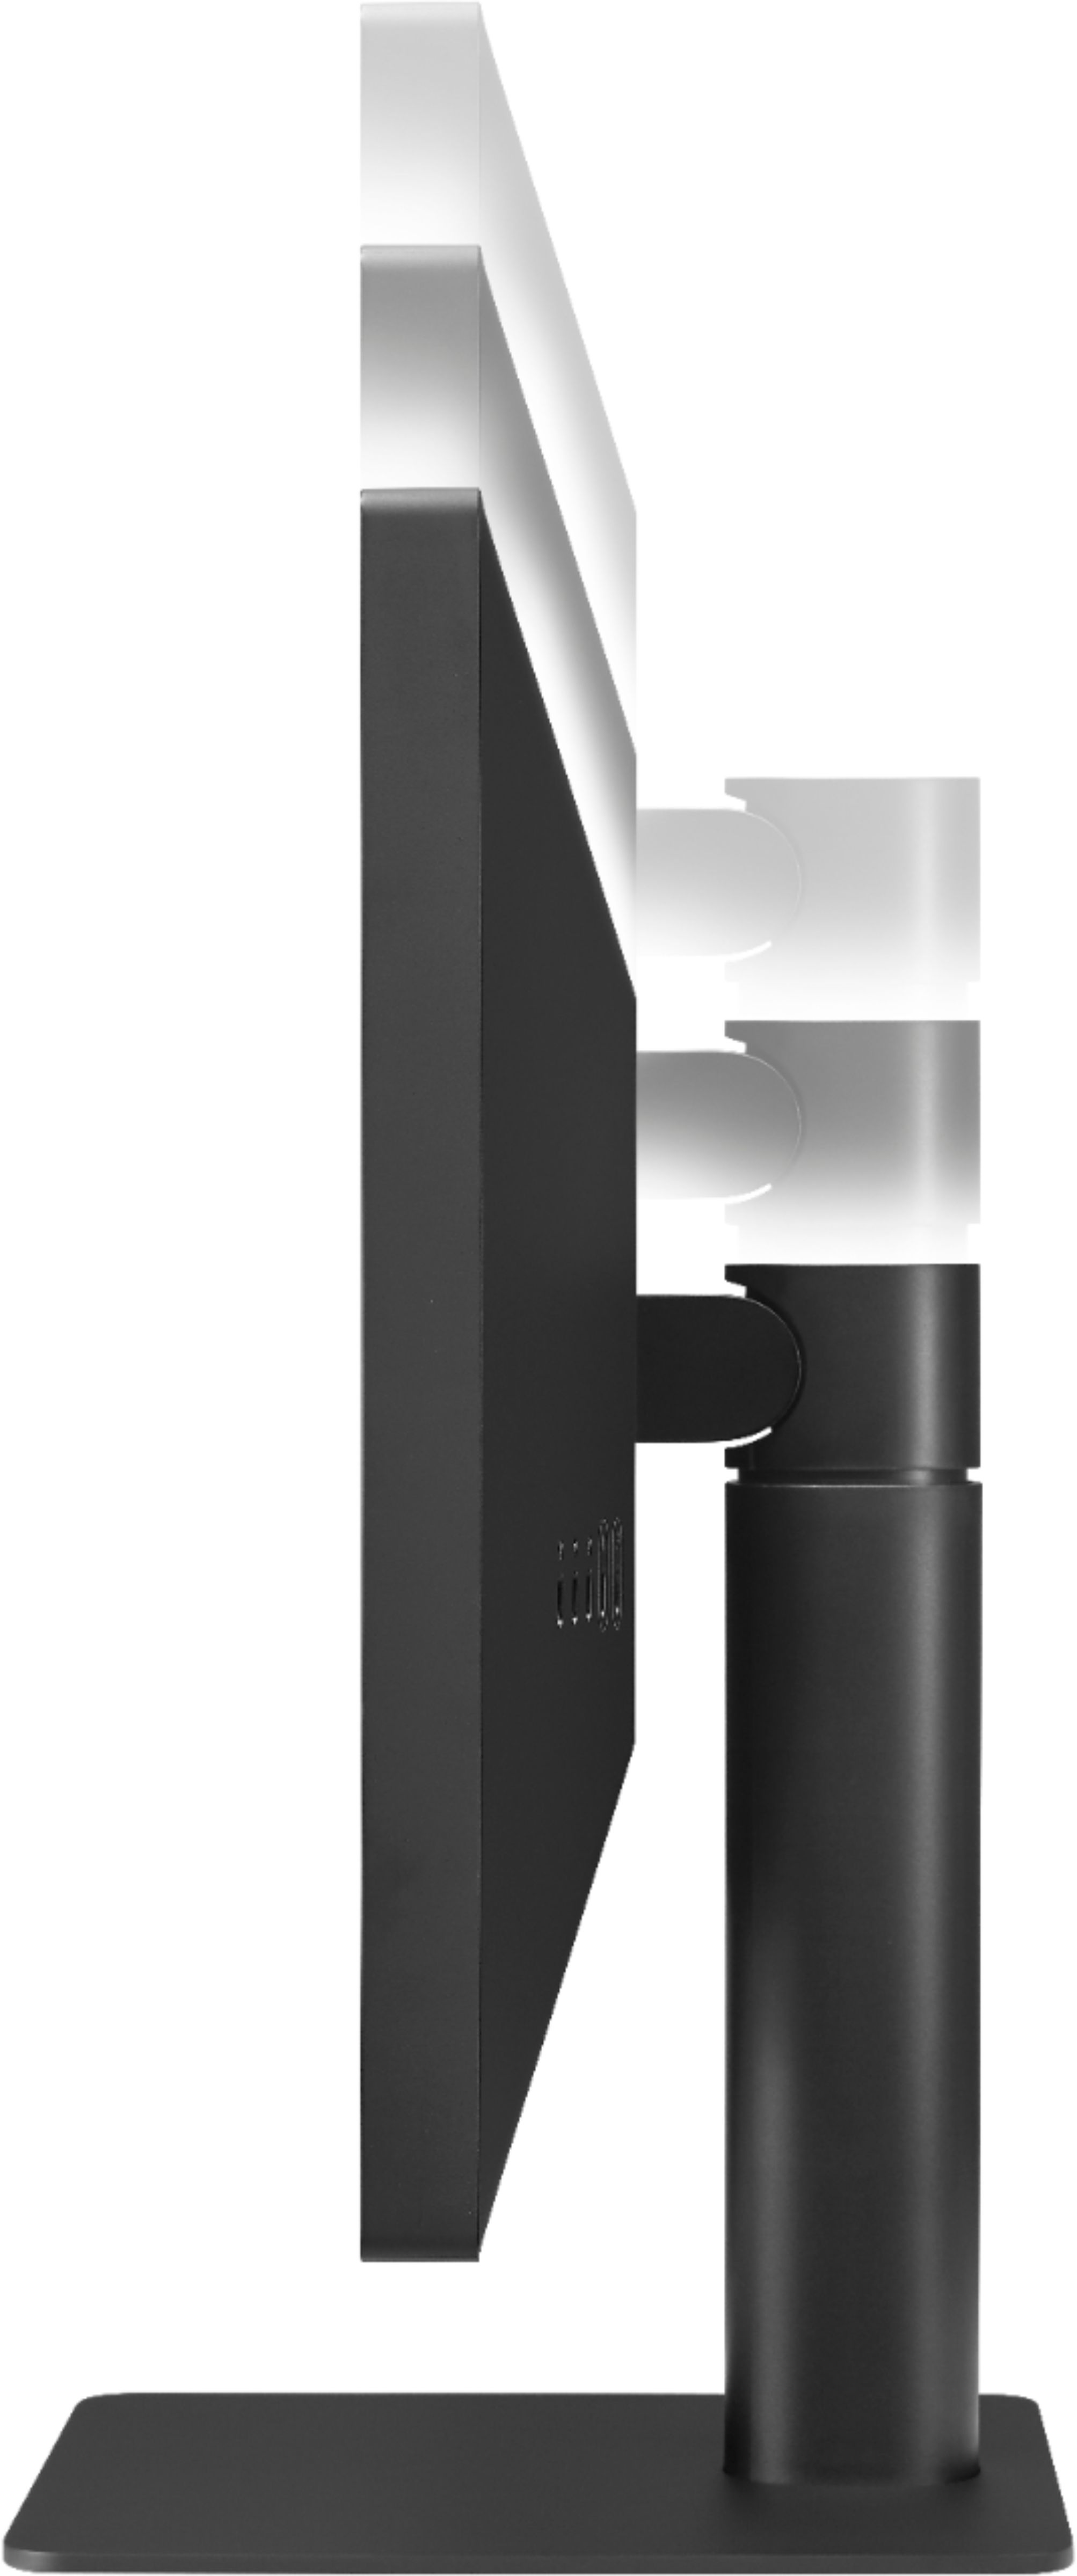 LG 24MD4KL-B - Monitor IPS ultrafino UHD (3840 x 2160) de 24 pulgadas,  amplia gama de colores P3, brillo de 500 nits, Thunderbolt 3 (x2), puertos